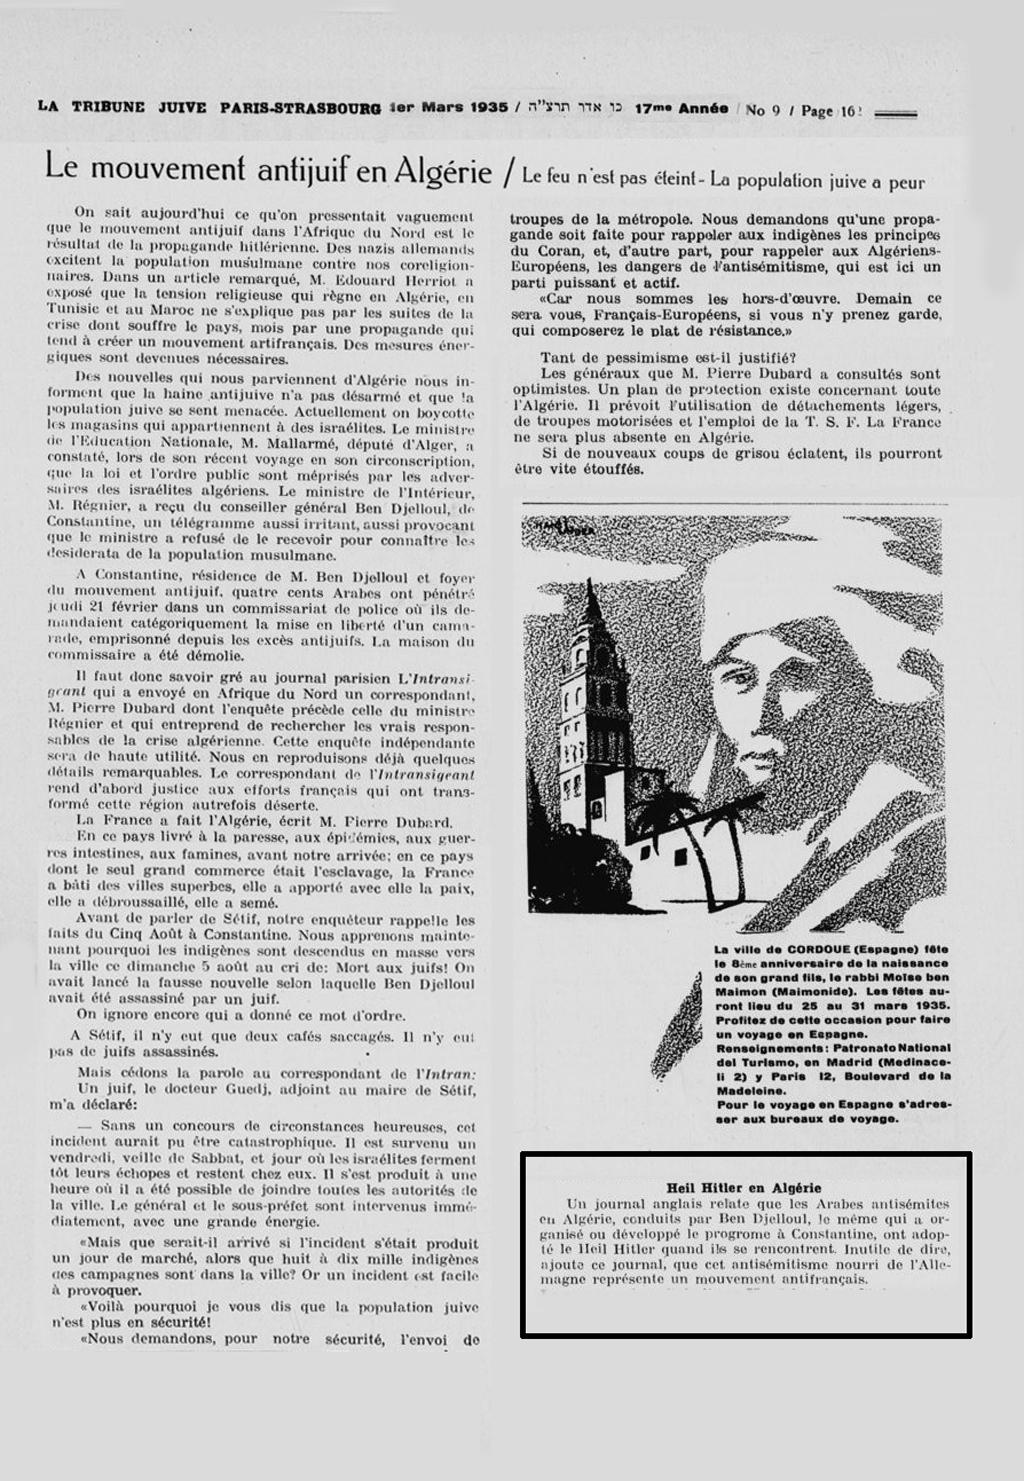 Tribune juive 1er mars 1935 sur l antisemitisme 1